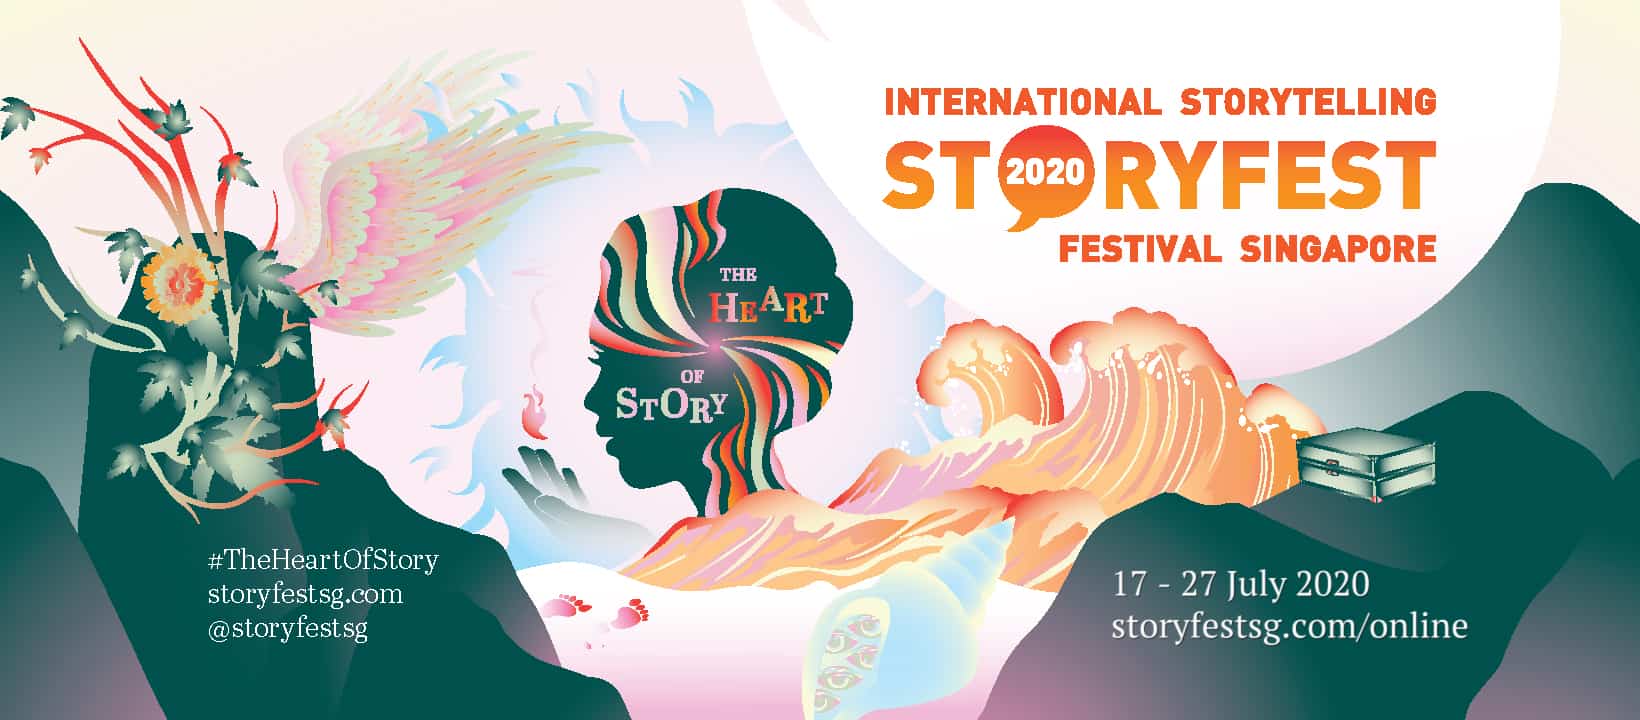 StoryFest Online 2020 - City Nomads